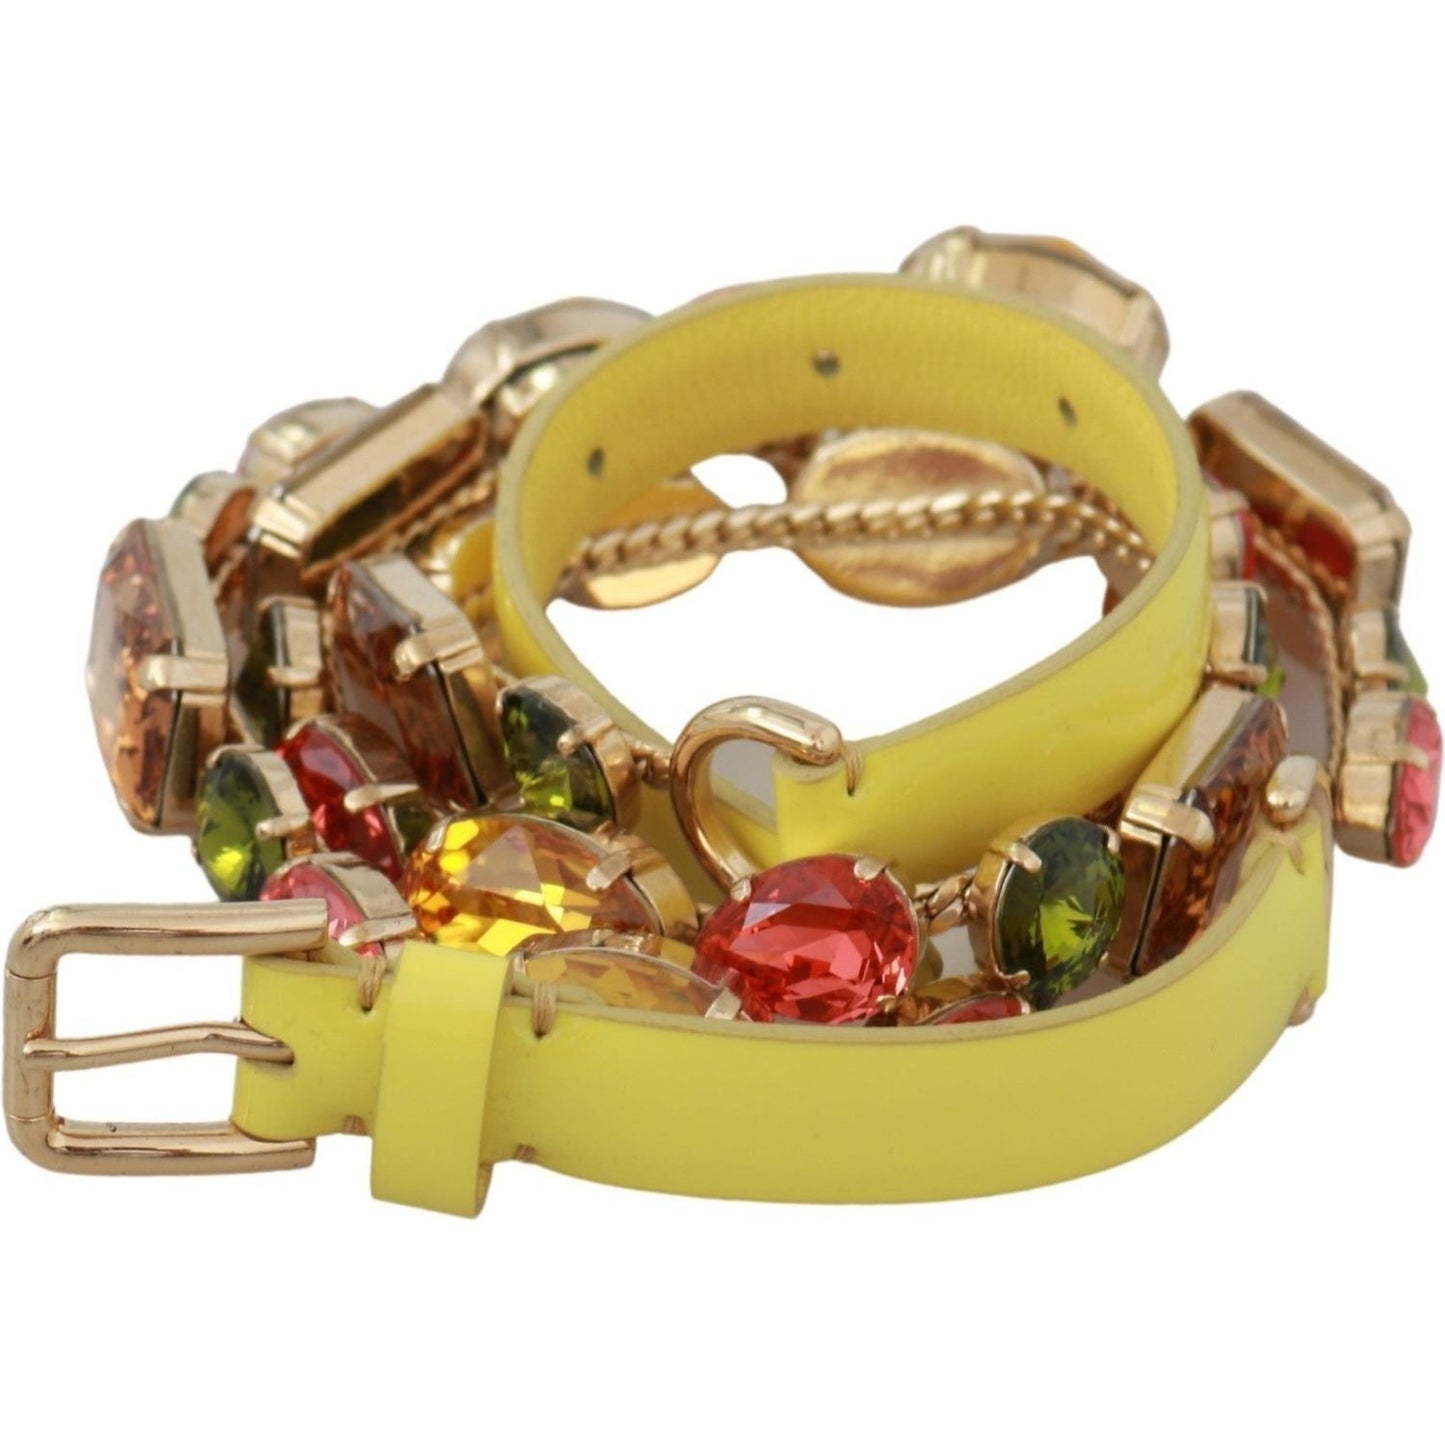 Dolce & Gabbana Stunning Crystal-Embellished Leather Belt Belt yellow-gold-multicolor-crystals-waist-belt IMG_9963-da301c3b-97b.jpg